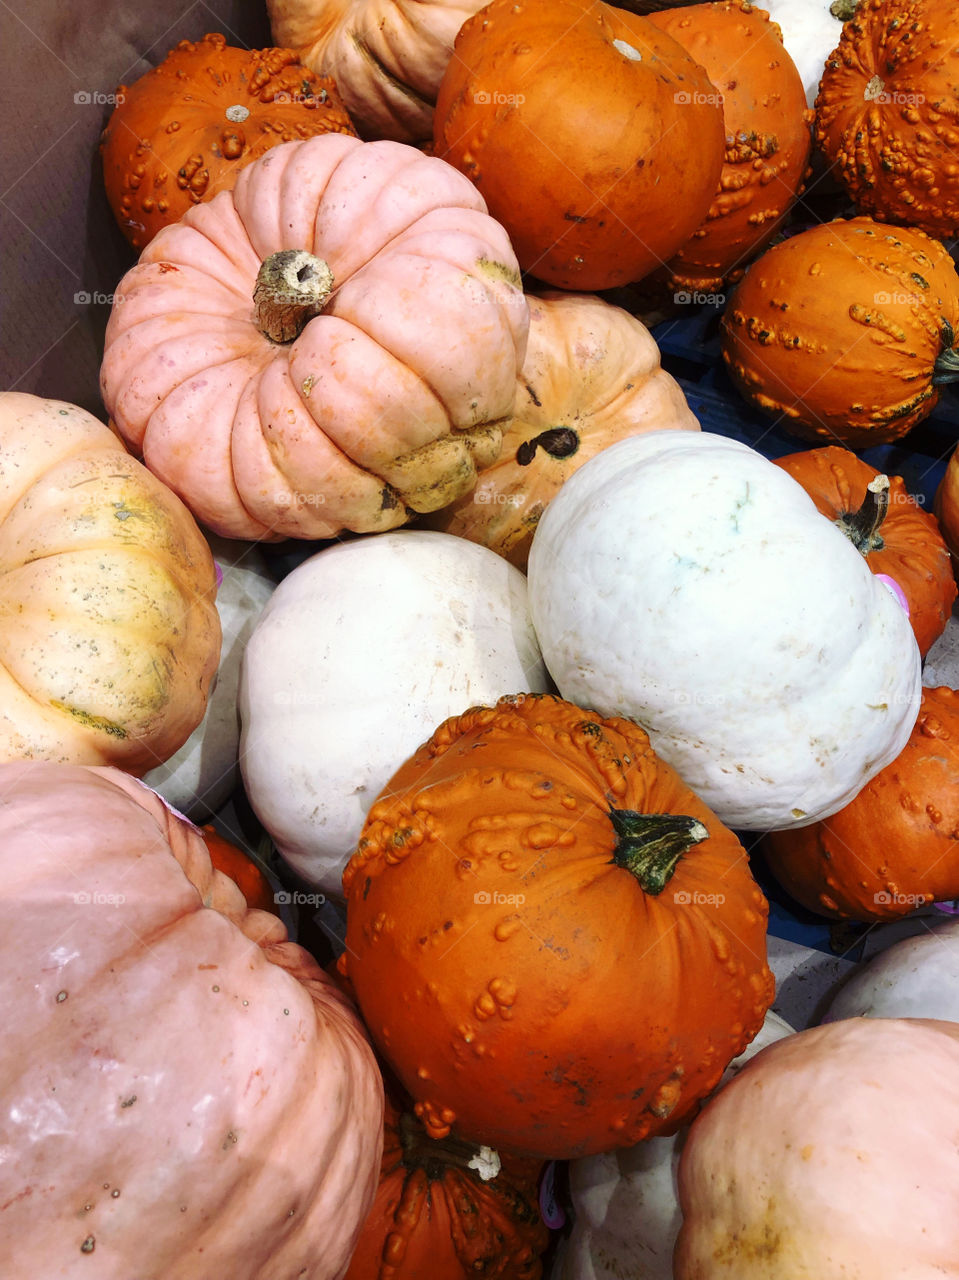 An array of various colored pumpkins.